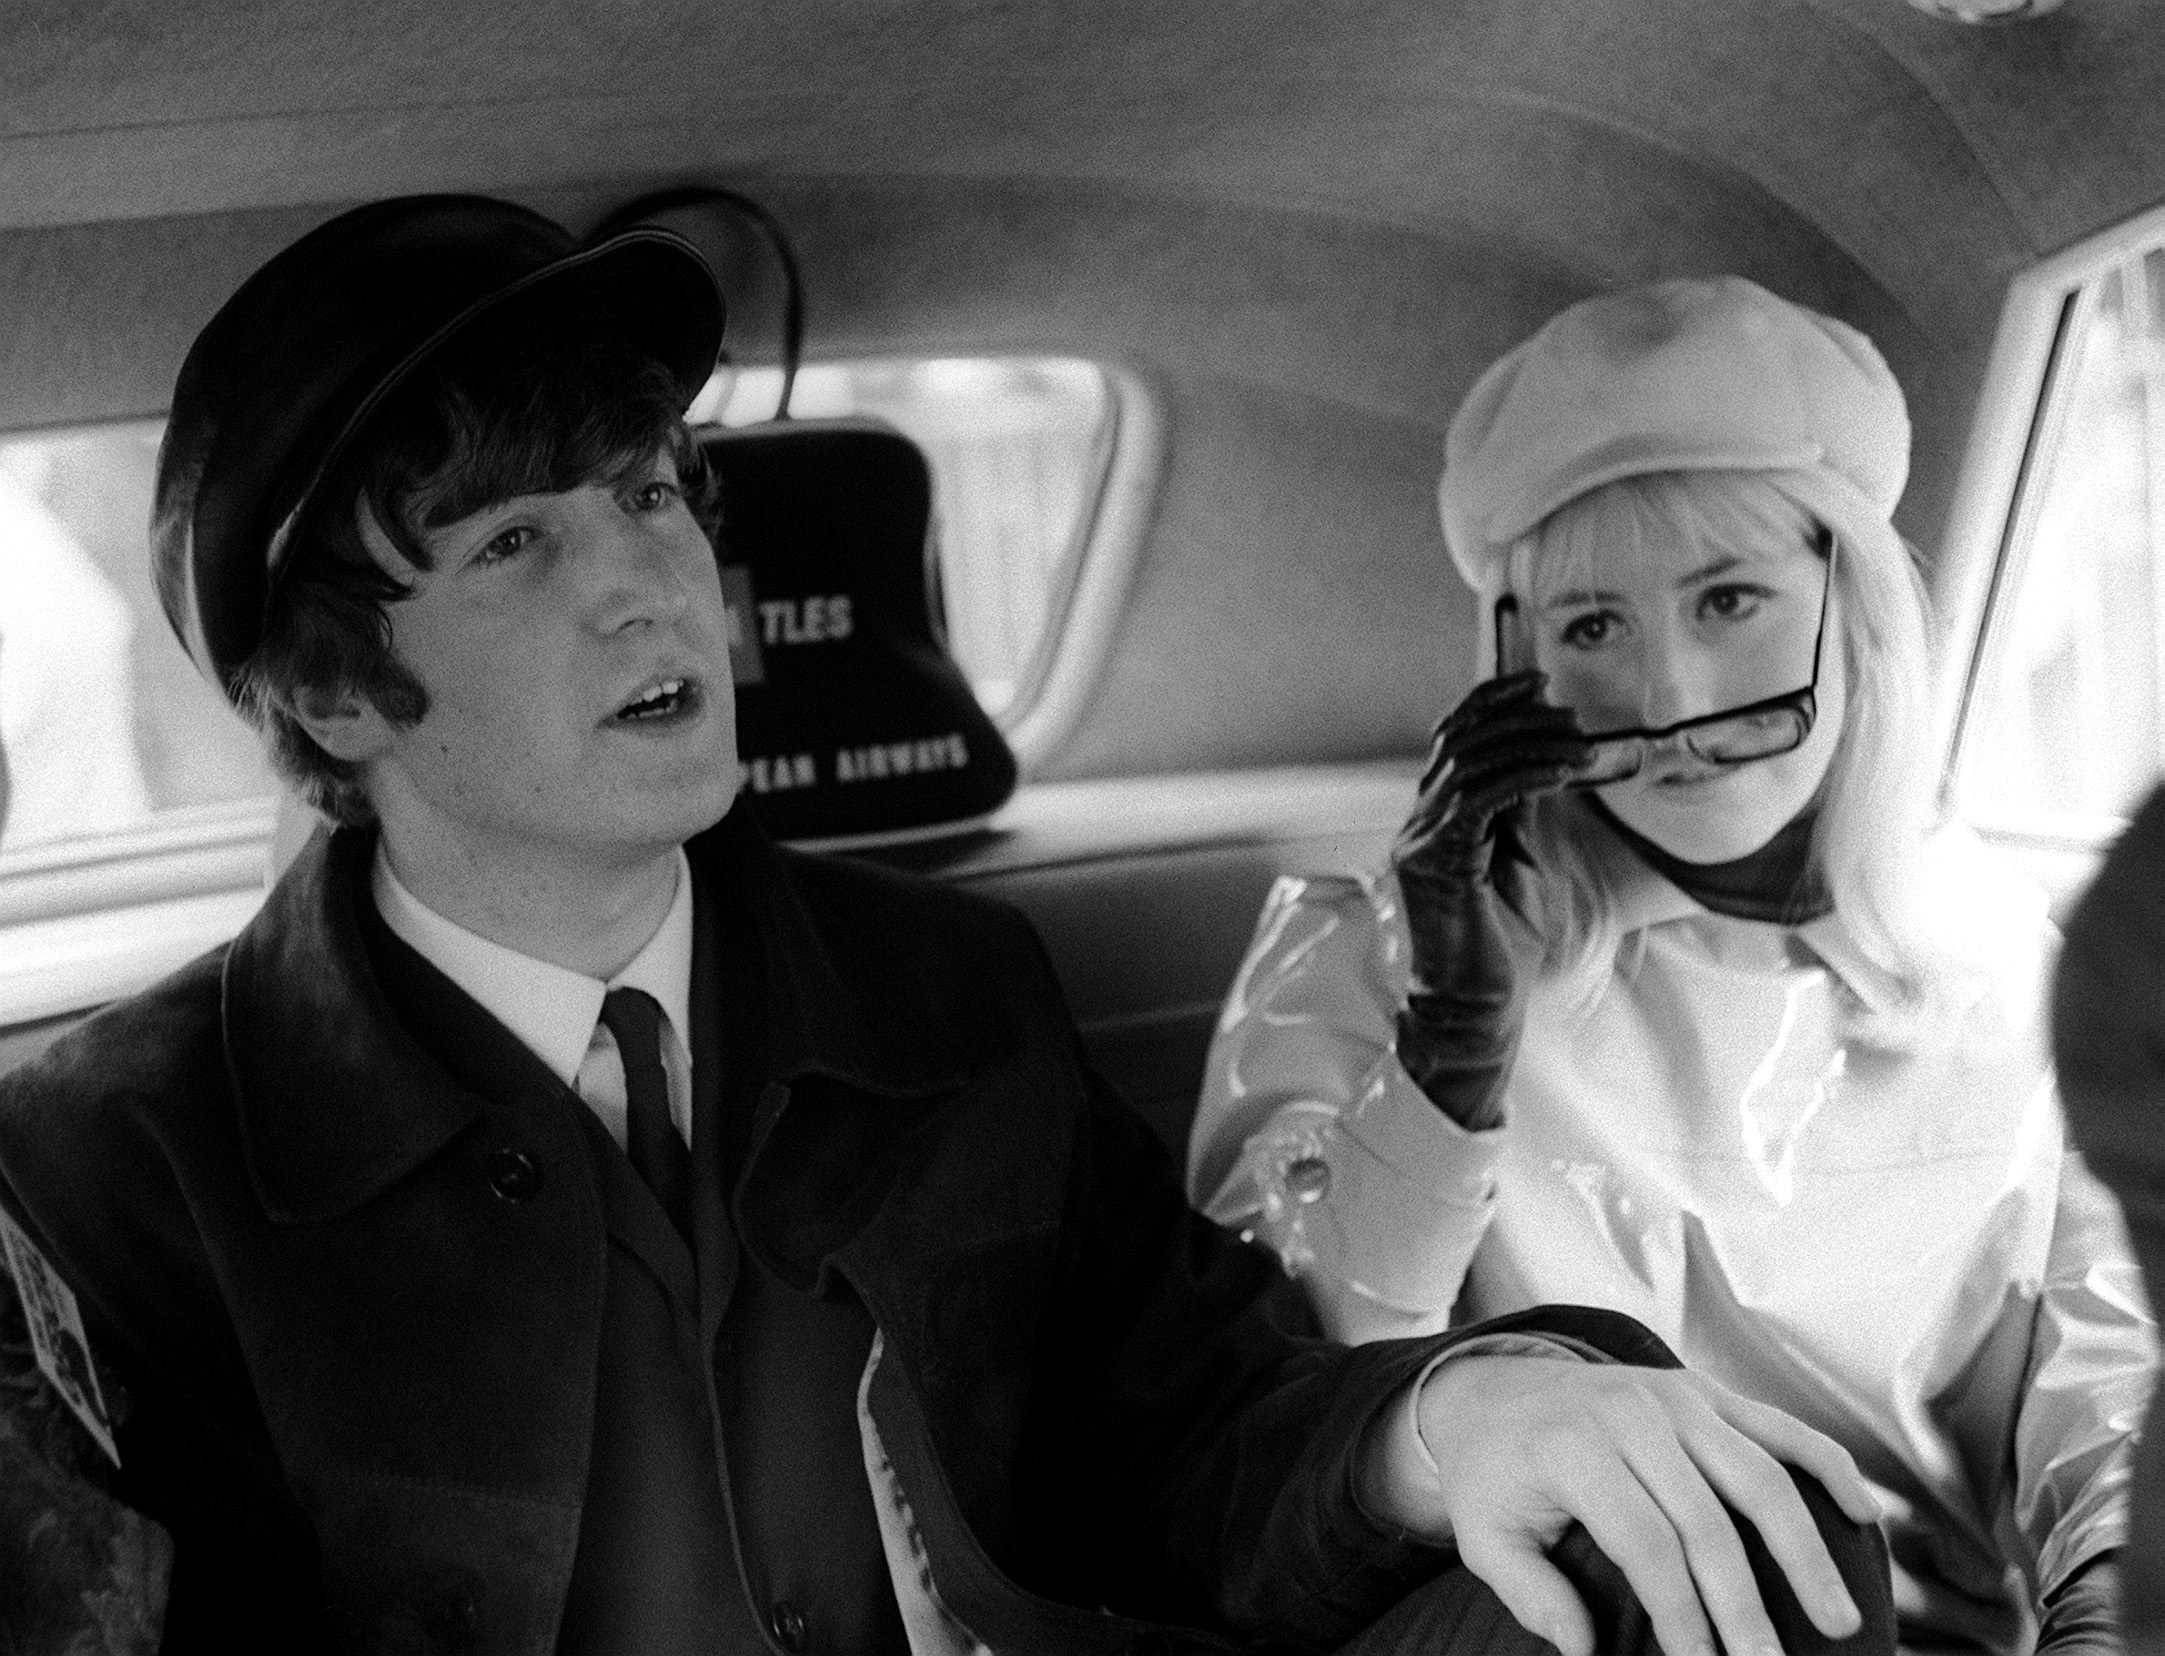 John Lennon and Cynthia Lennon in the back of a car.